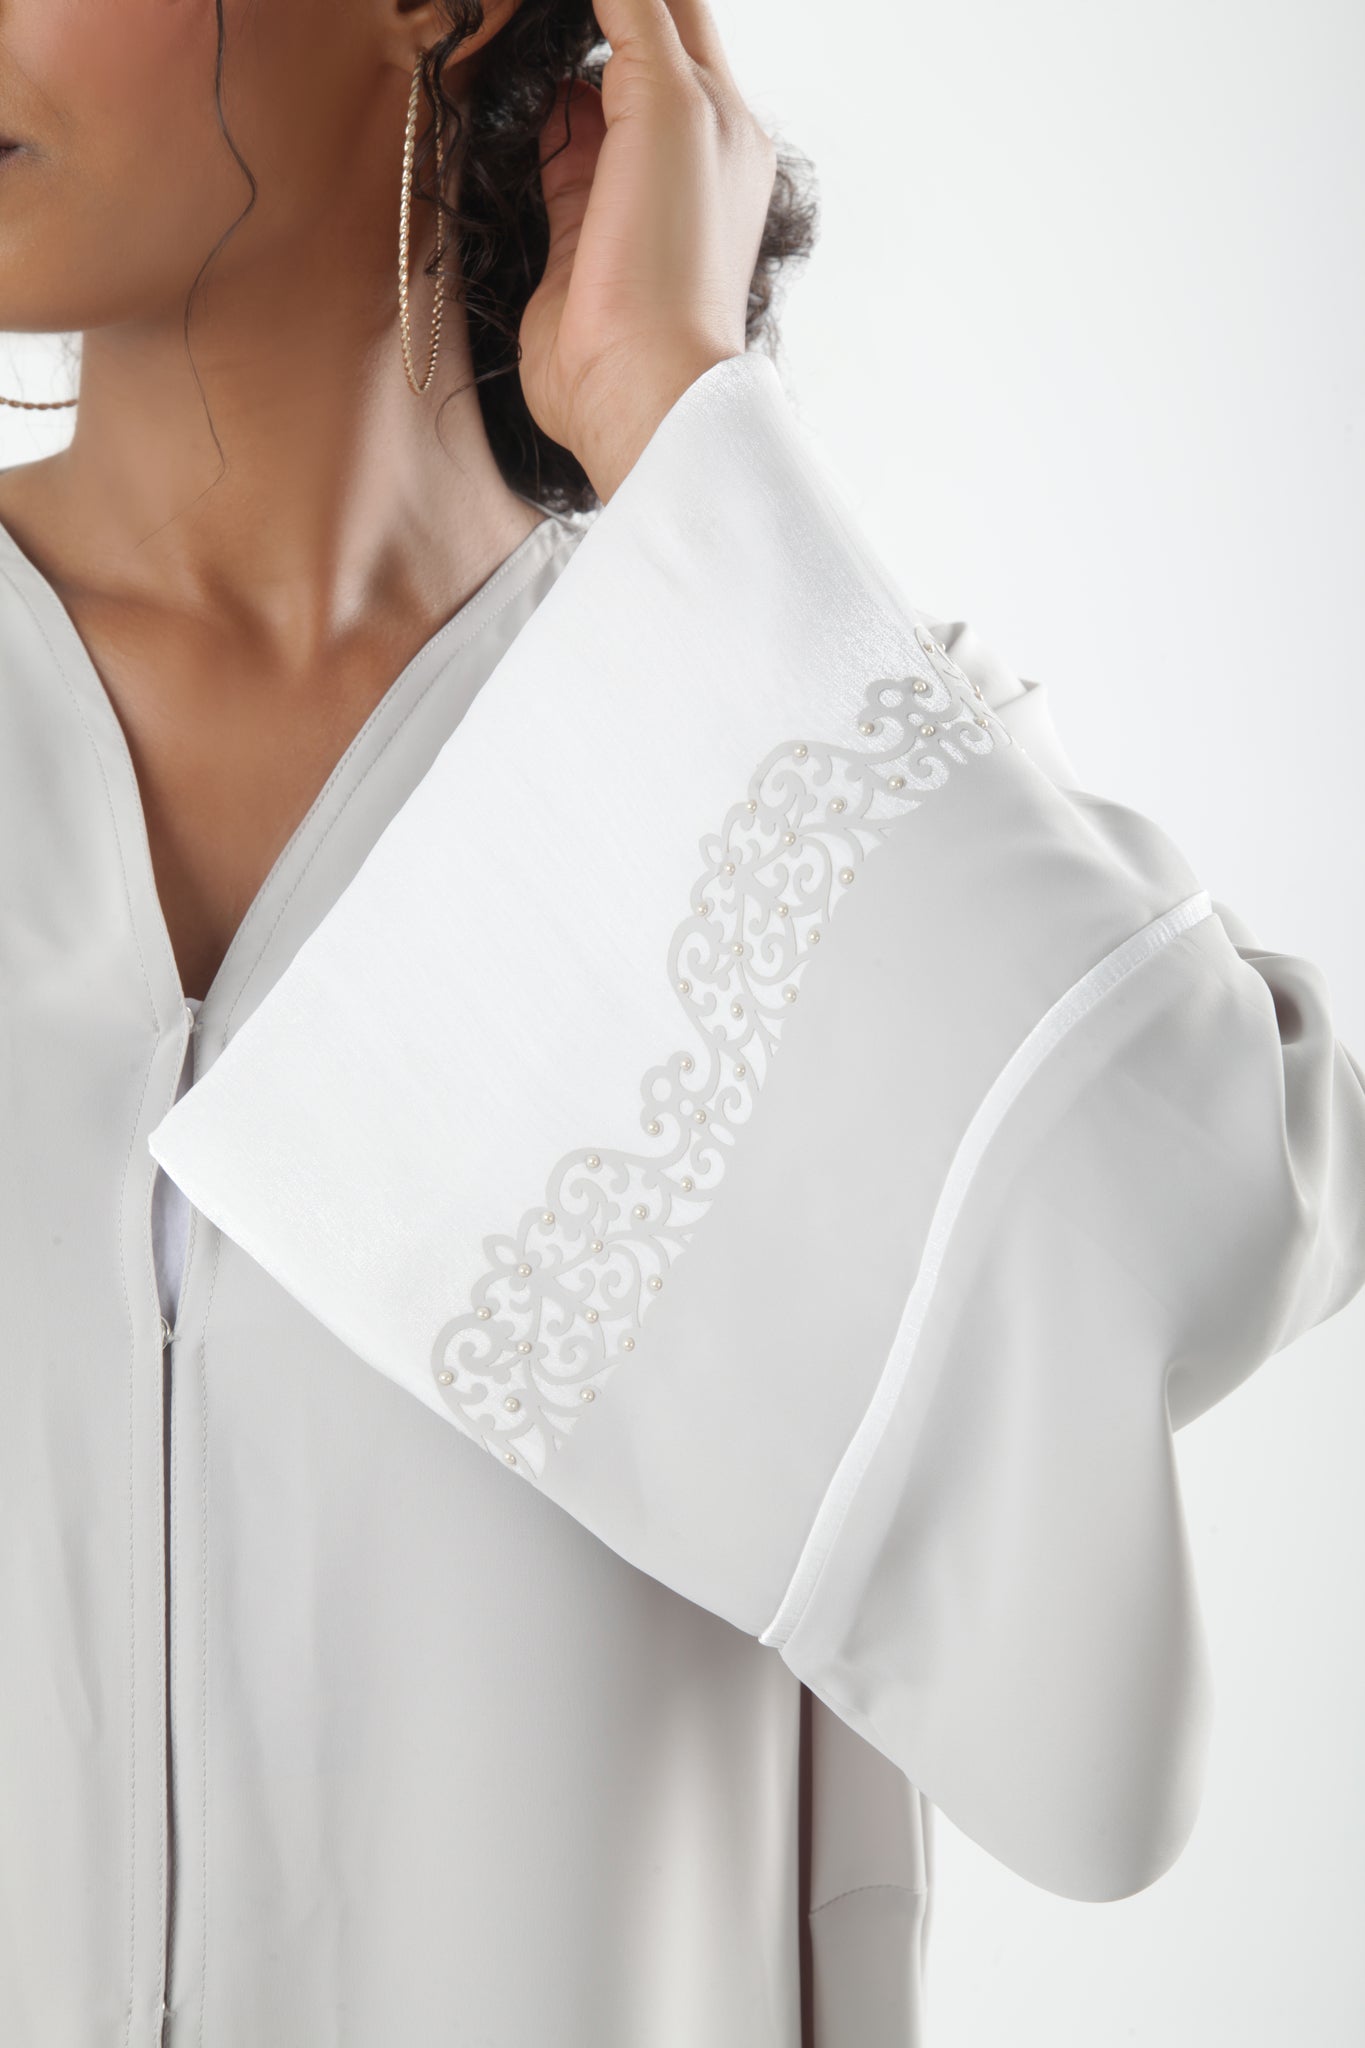 Abaya Khaleeji With Sleeves Design